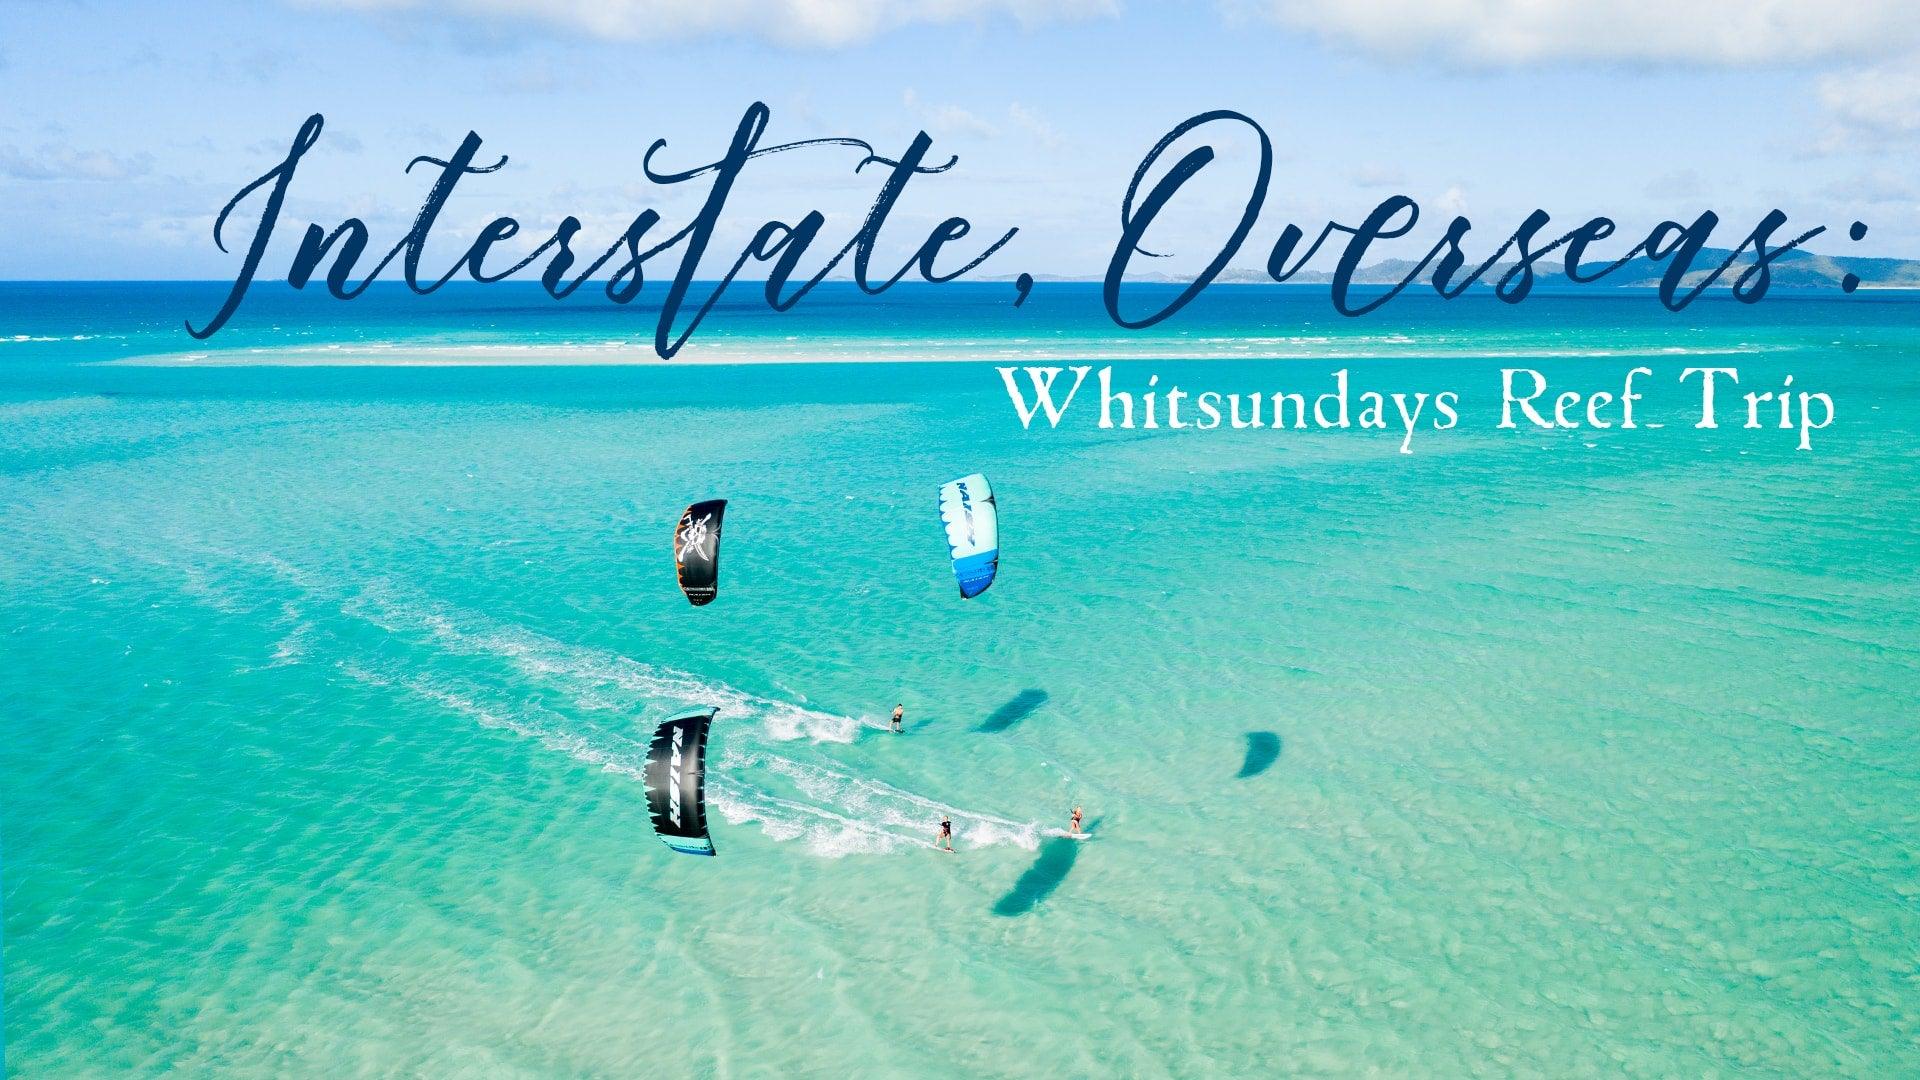 Interstate, Overseas: Whitsundays Reef Trip - Naish.com